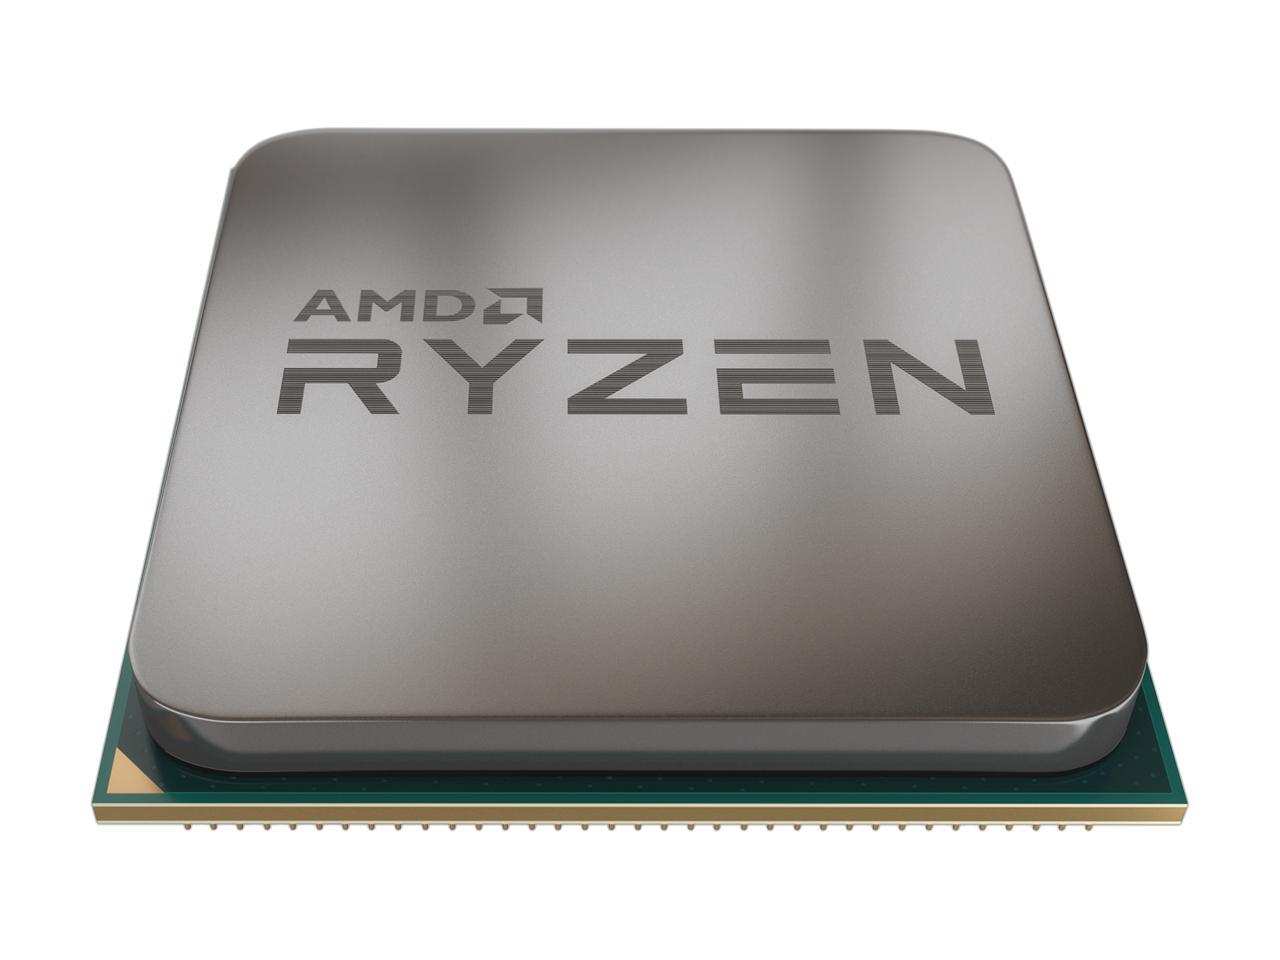 AMD Ryzen 3 2200G - Rekes Sales